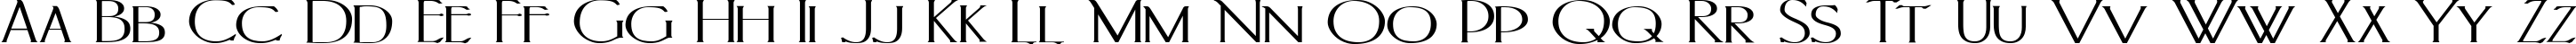 Пример написания английского алфавита шрифтом PortlandRoman Bold